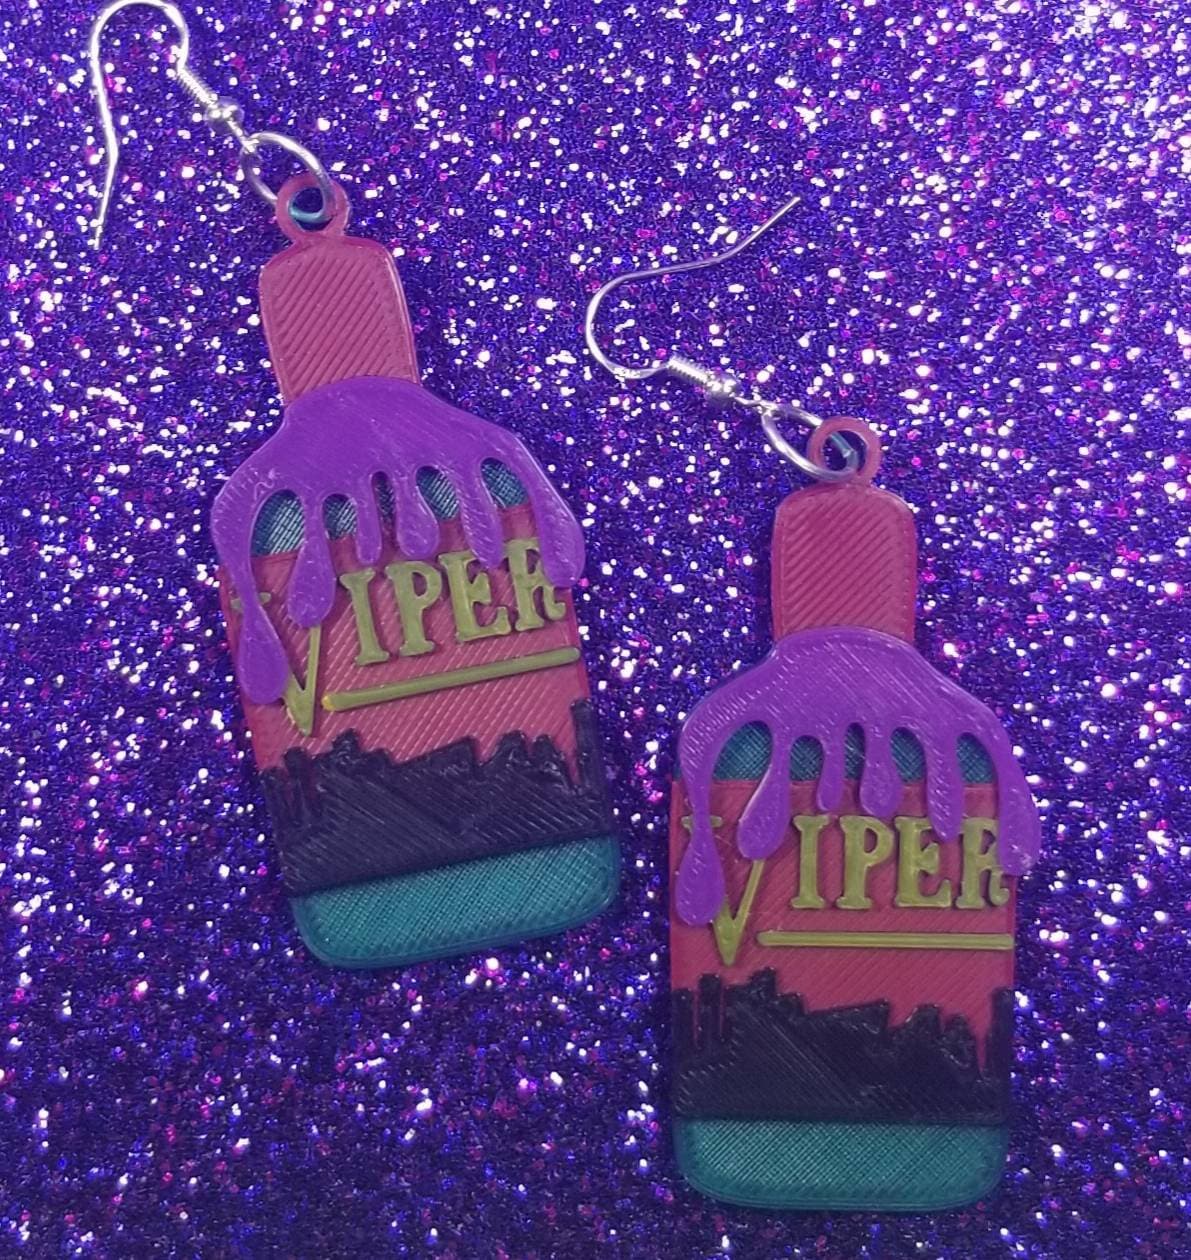 Viper Bottle Horror Movie Statement Earrings 3D Printed